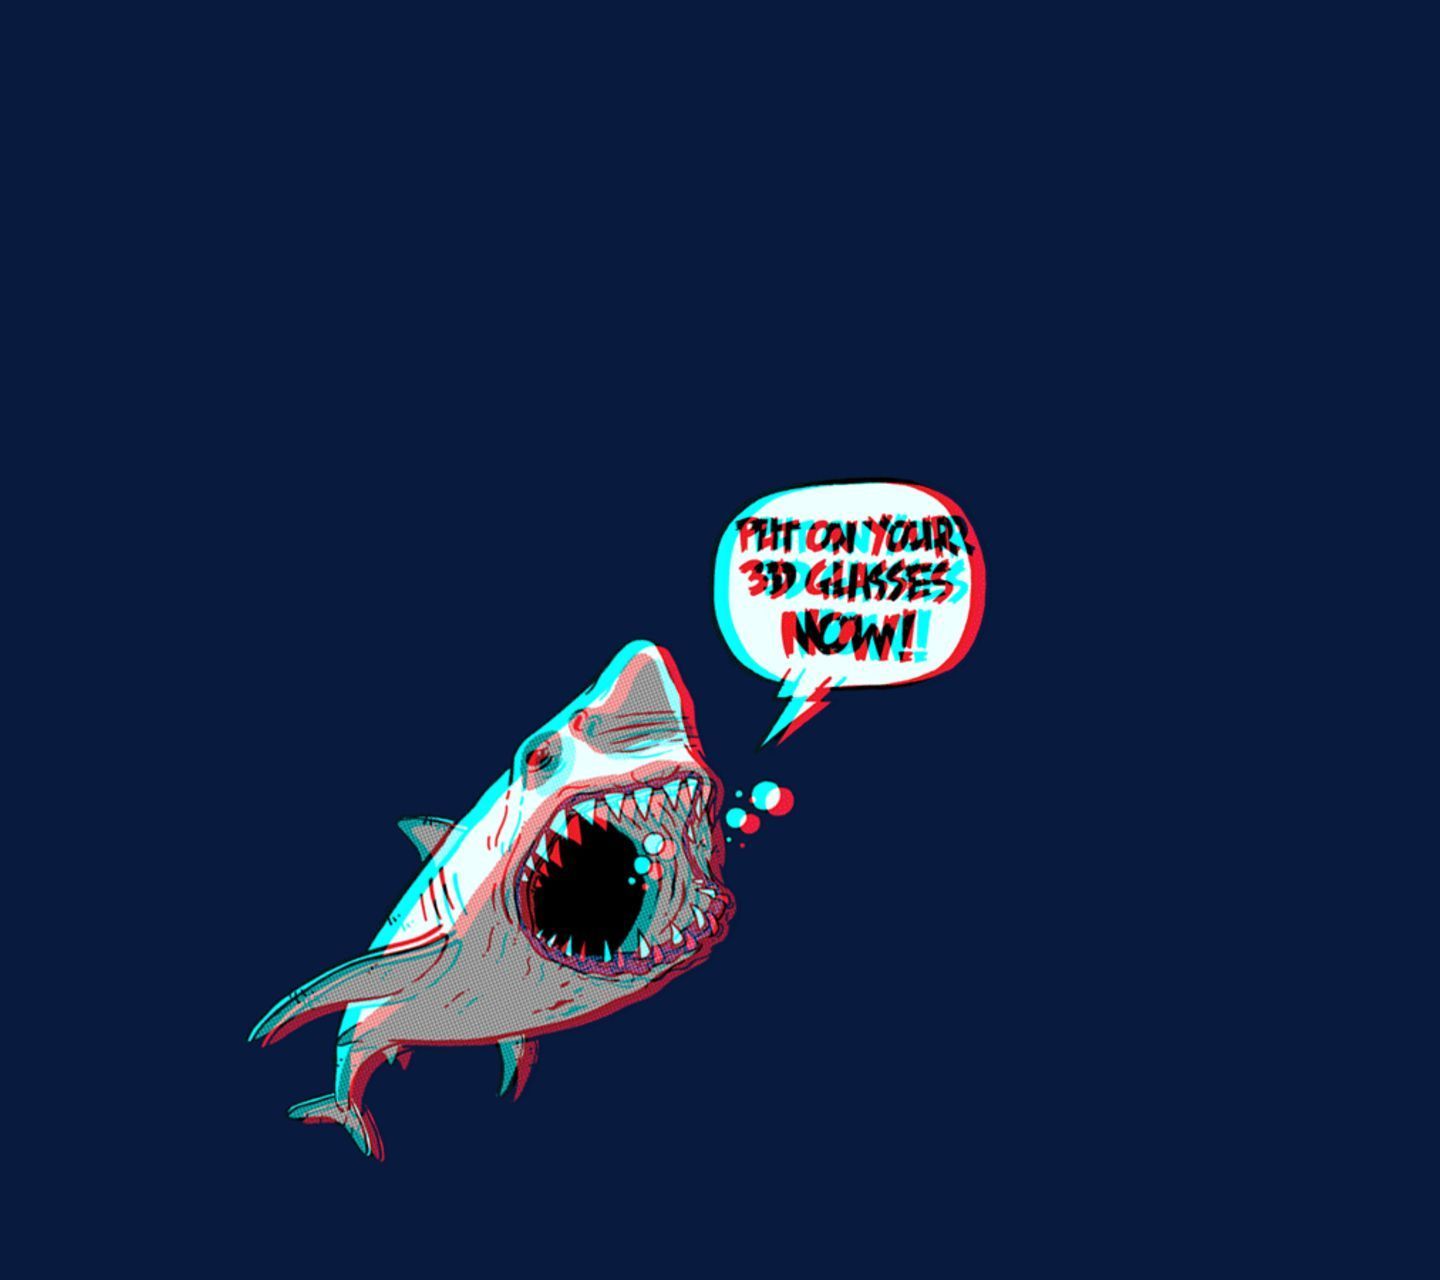 A shark saying 